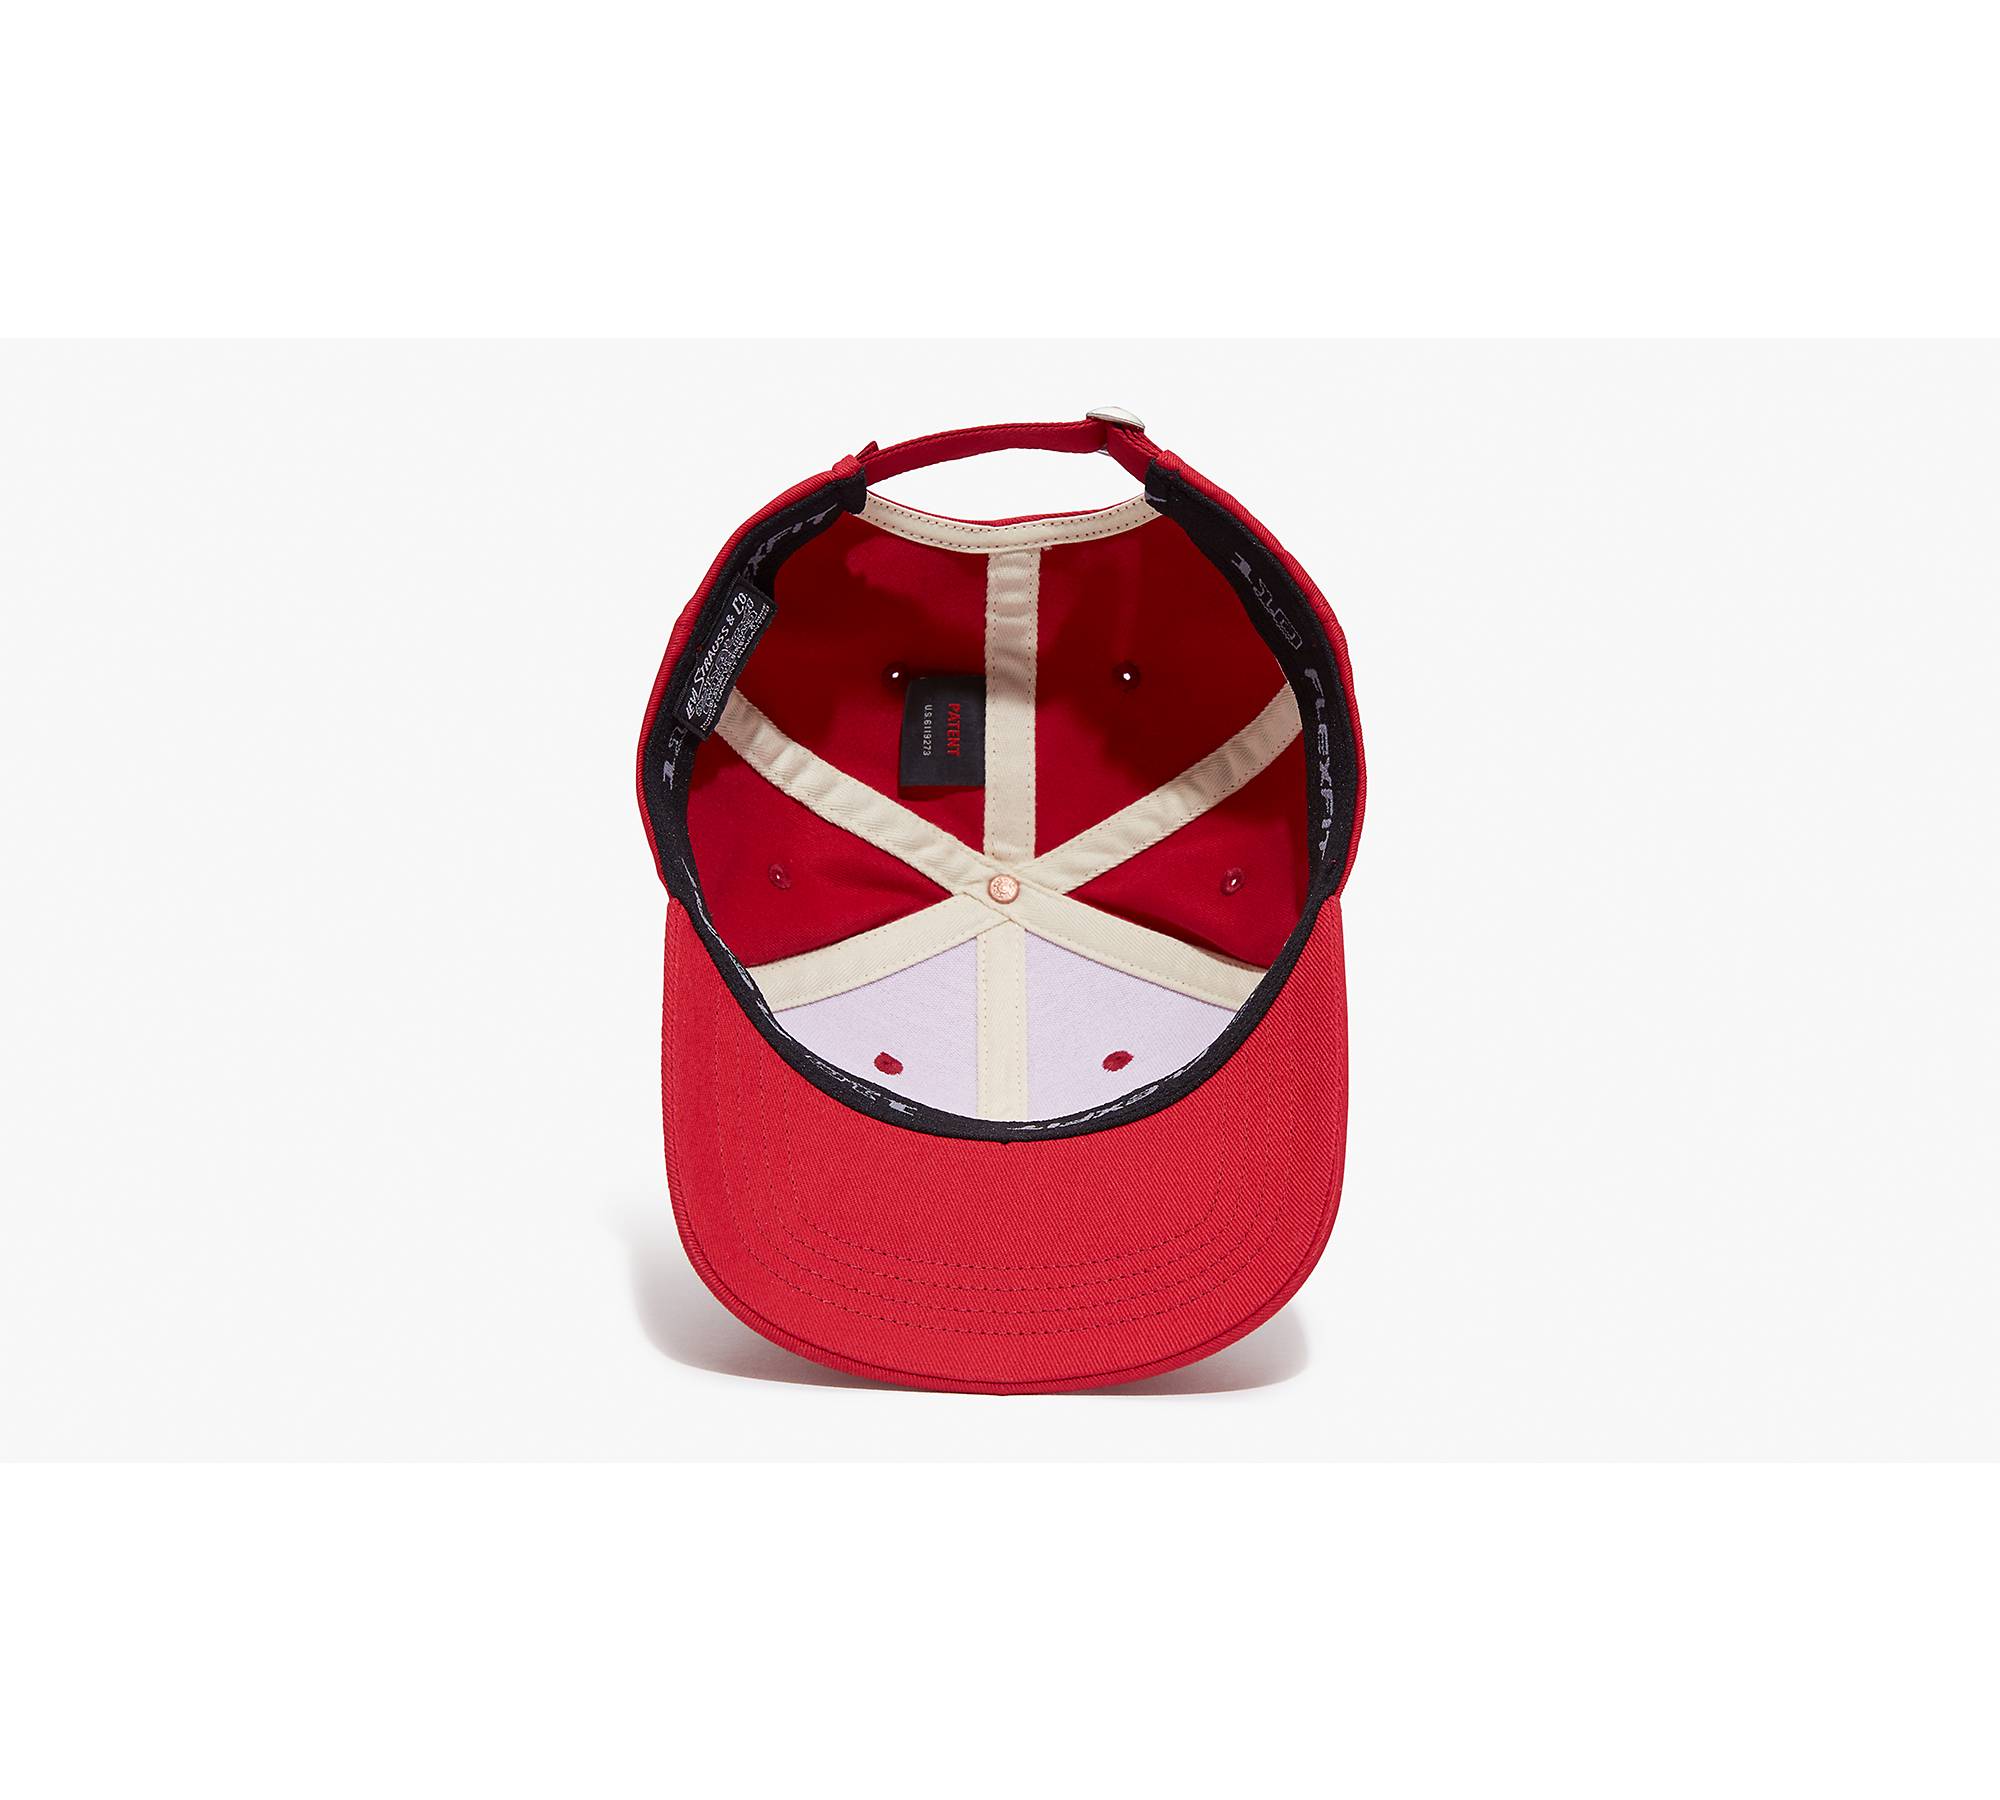 Levi's® Logo Flex Fit Baseball Hat - Red | Levi's® US